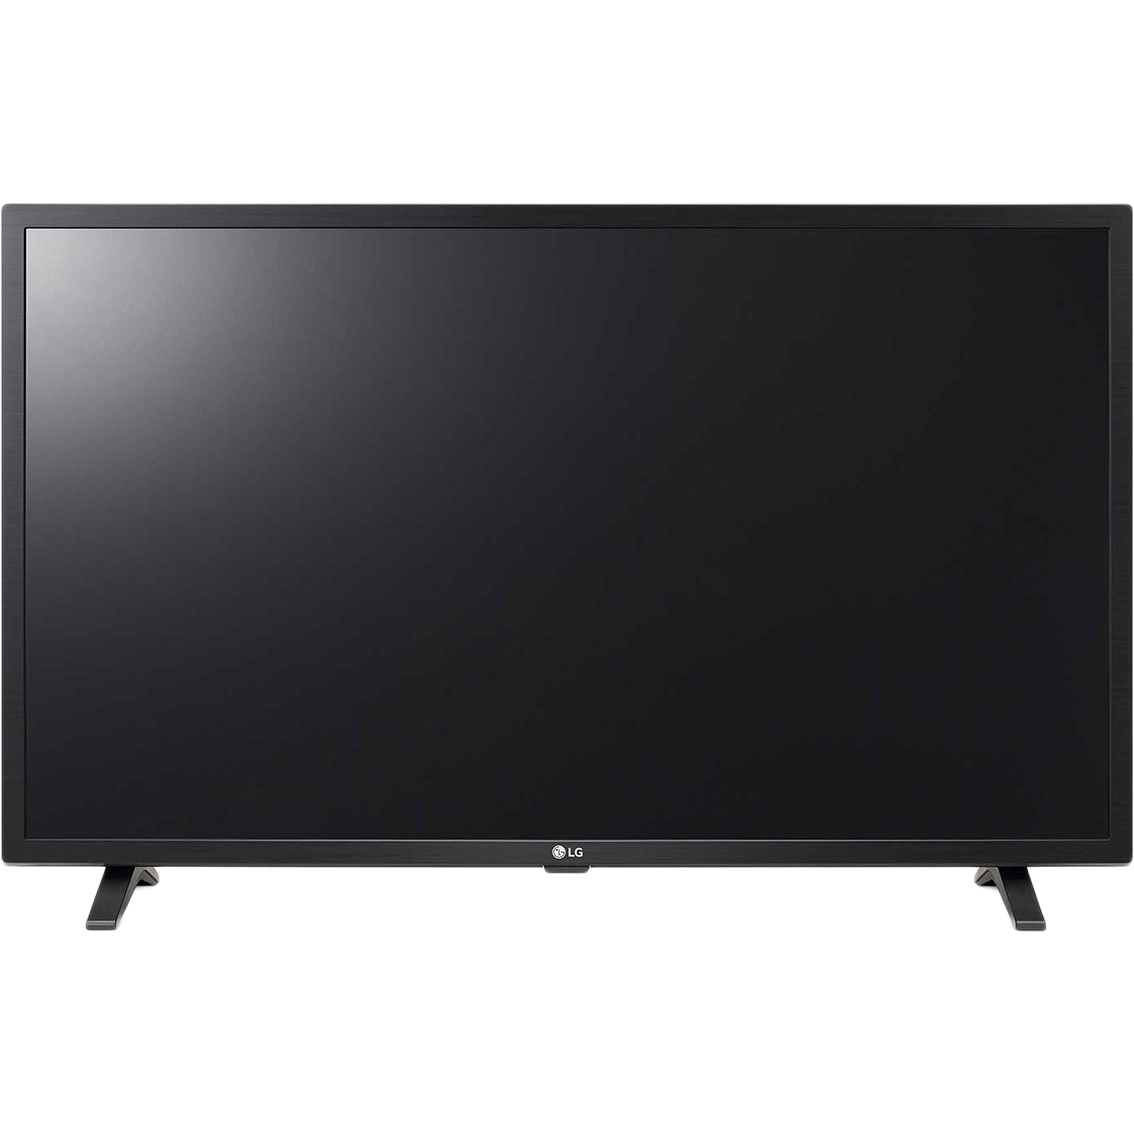 Телевизор LG 32LM550B, цвет черный - фото 2